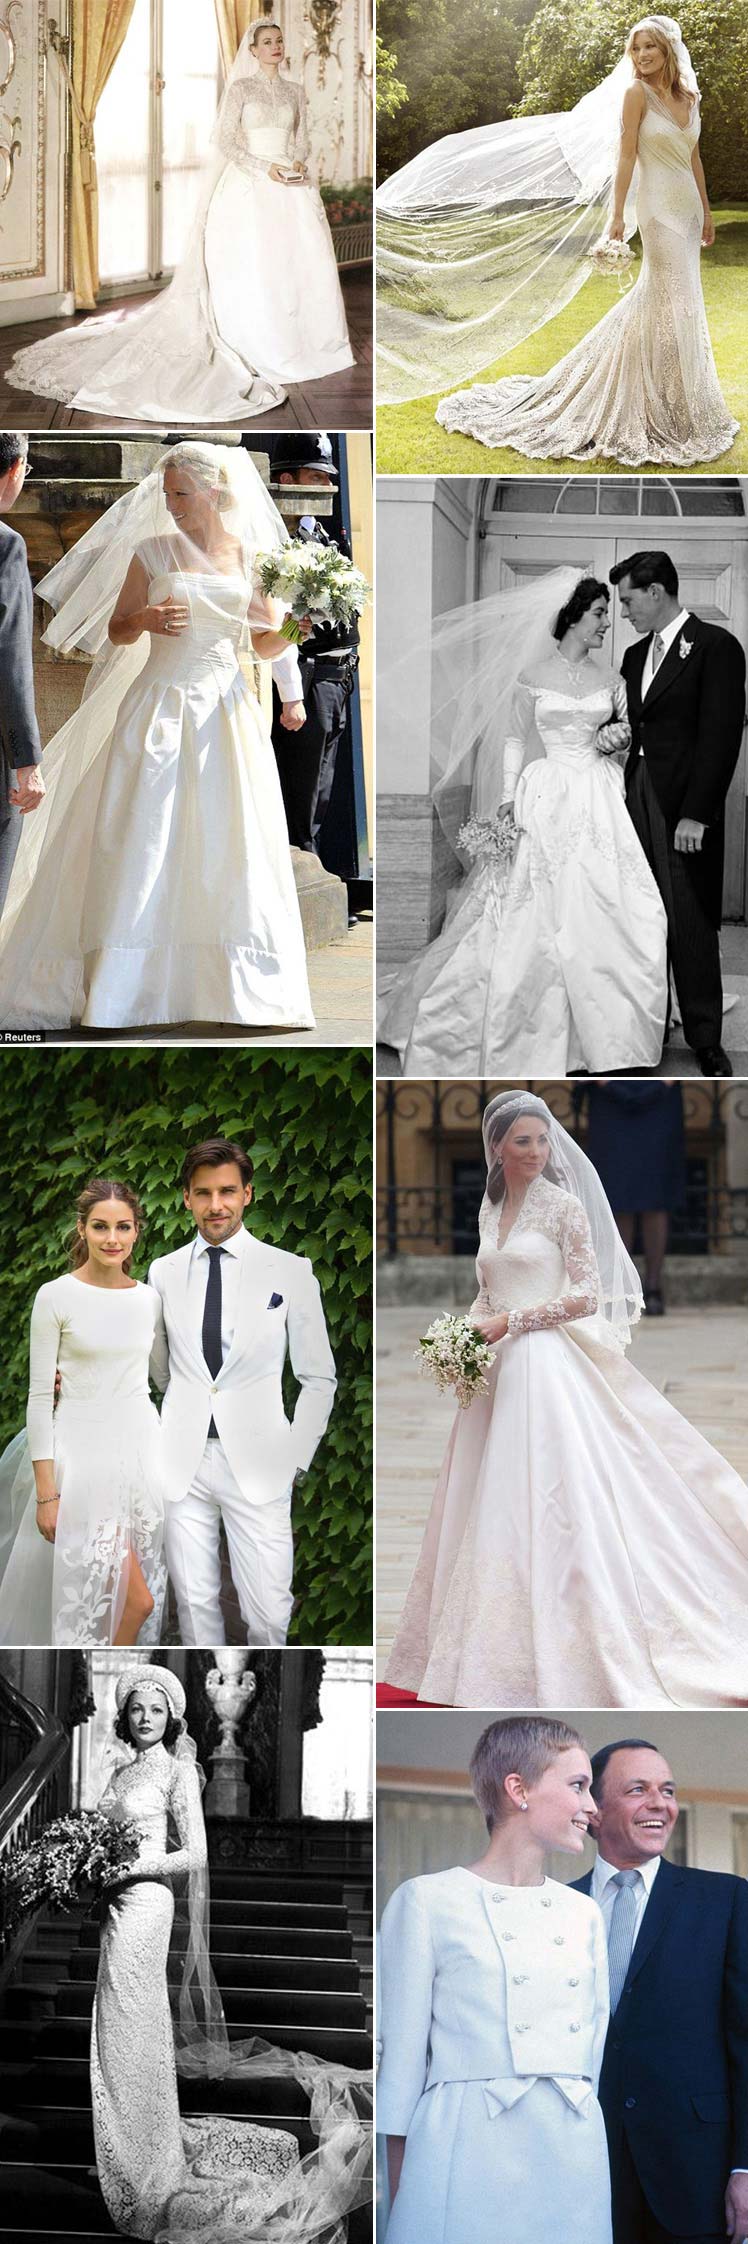 Classic wedding dress style ideas